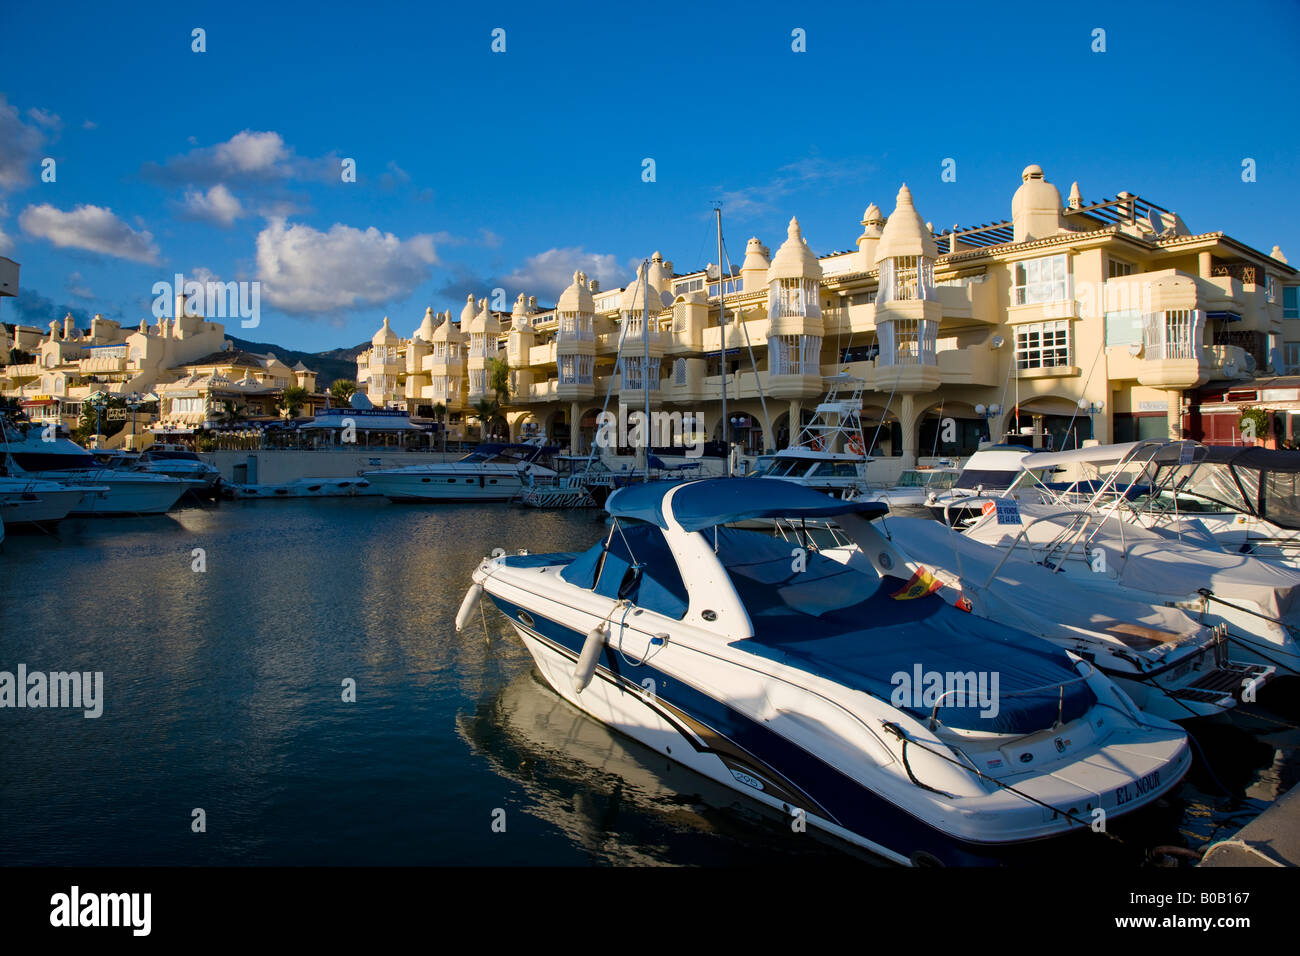 Die Marina Benalmadena Costa del Sol in der Nähe von Malaga Spanien Stockfoto